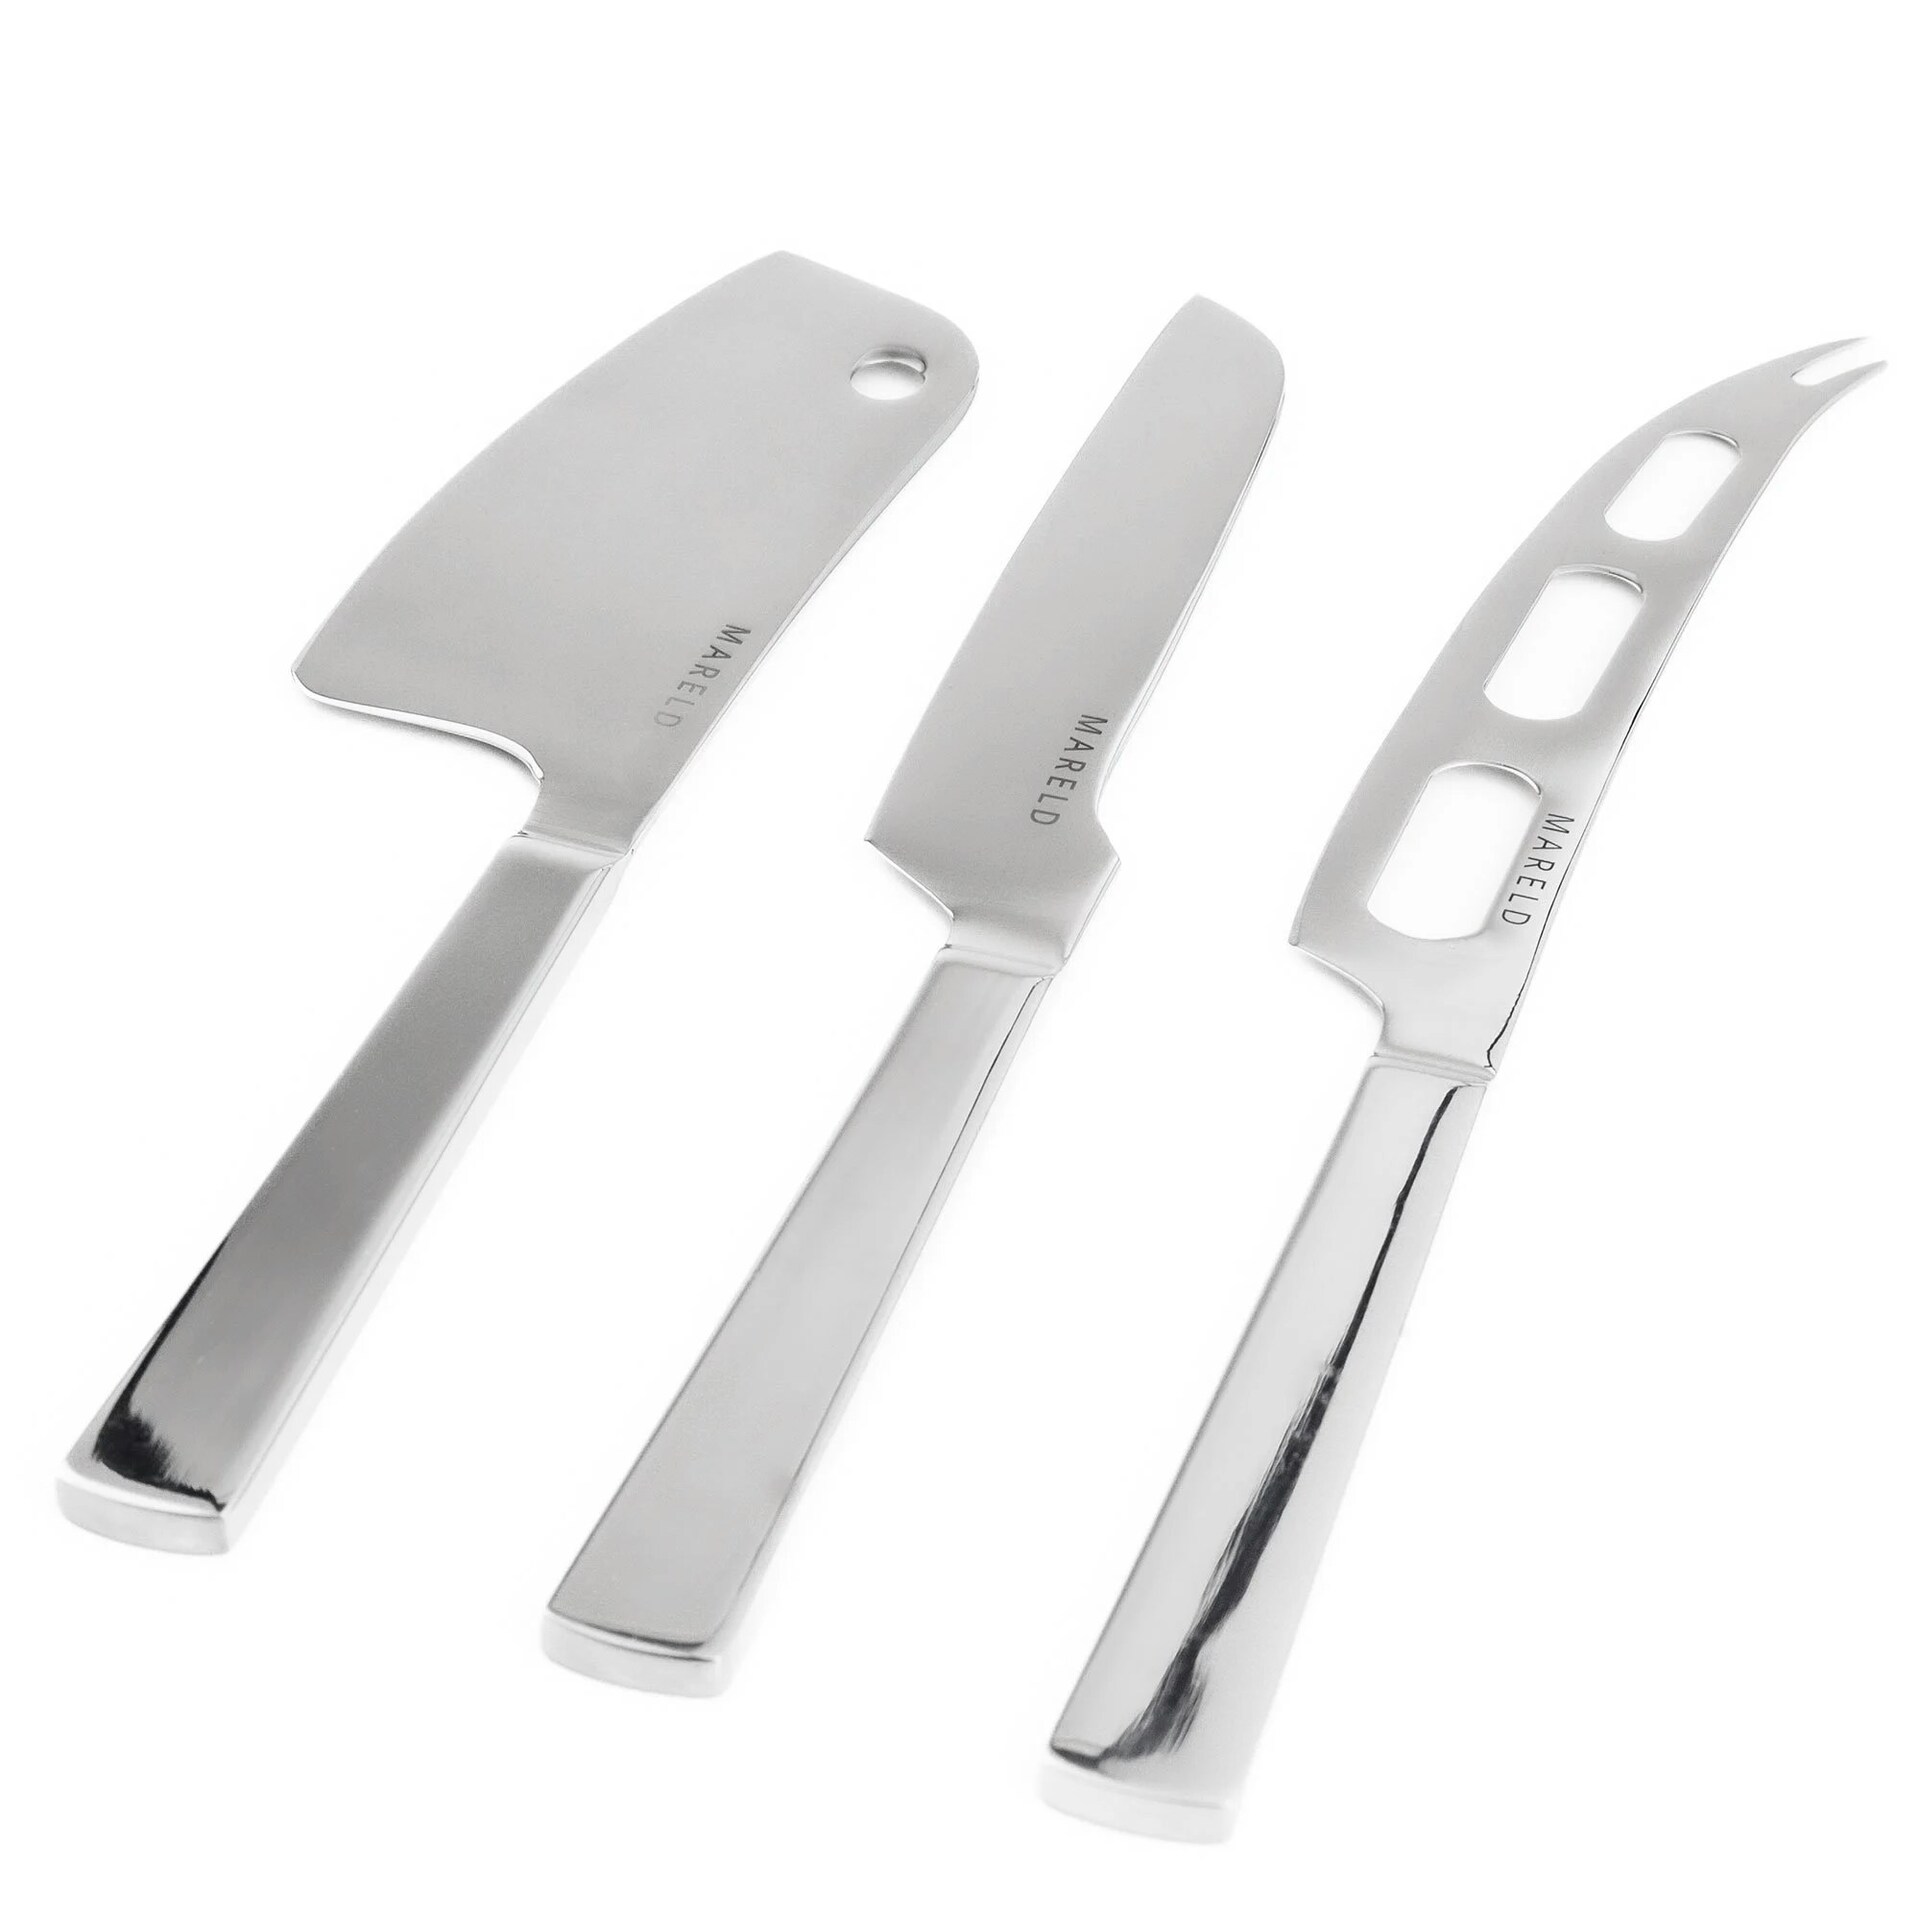 https://royaldesign.com/image/2/mareld-mareld-cheese-knife-set-3-pcs-stainless-steel-0